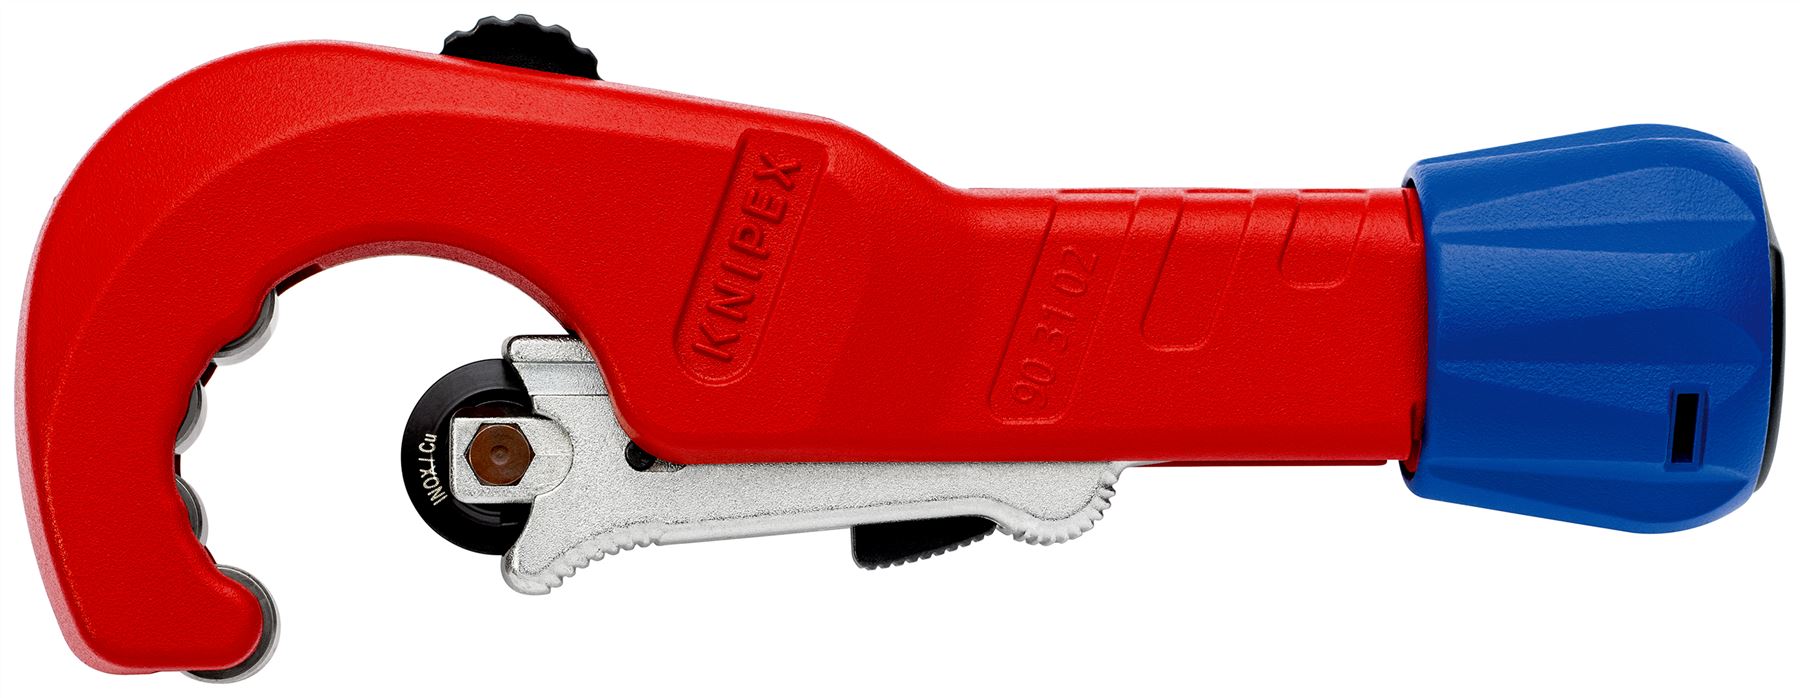 KNIPEX Tubix Pipe Cutter 6-35mm Capacity 180mm QuickLock Mechanism 90 31 02 SB